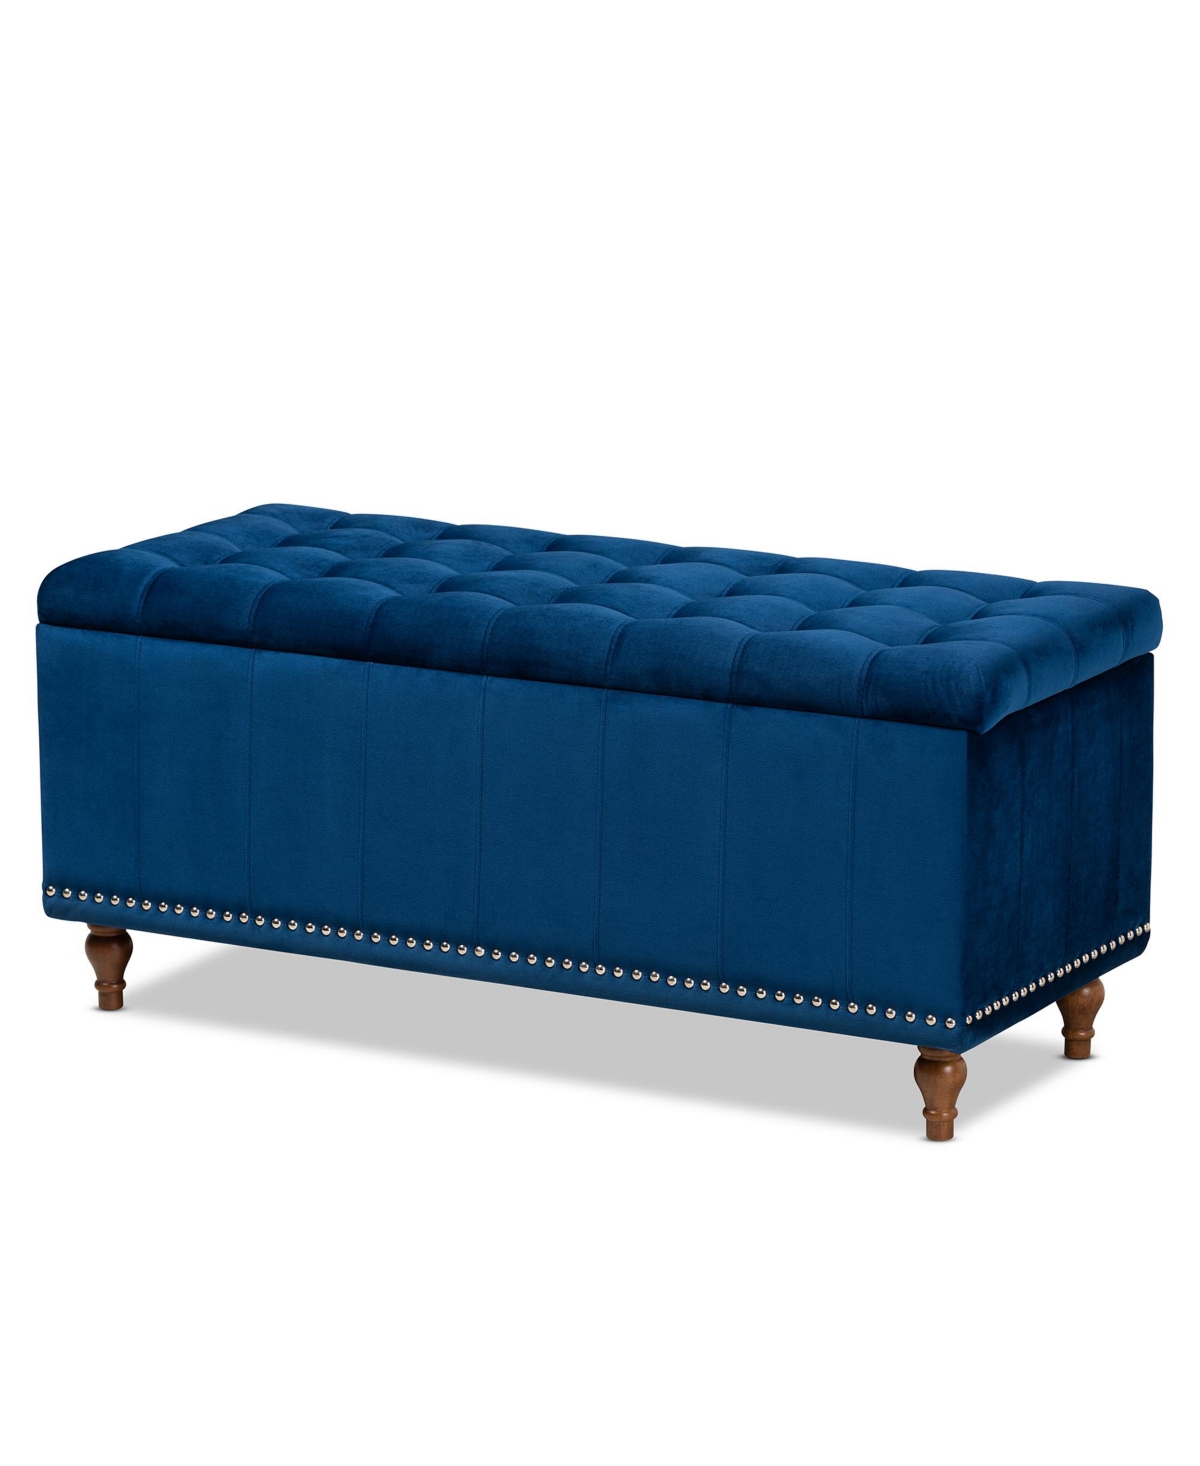 Furniture Kaylee Storage Bench In Blue